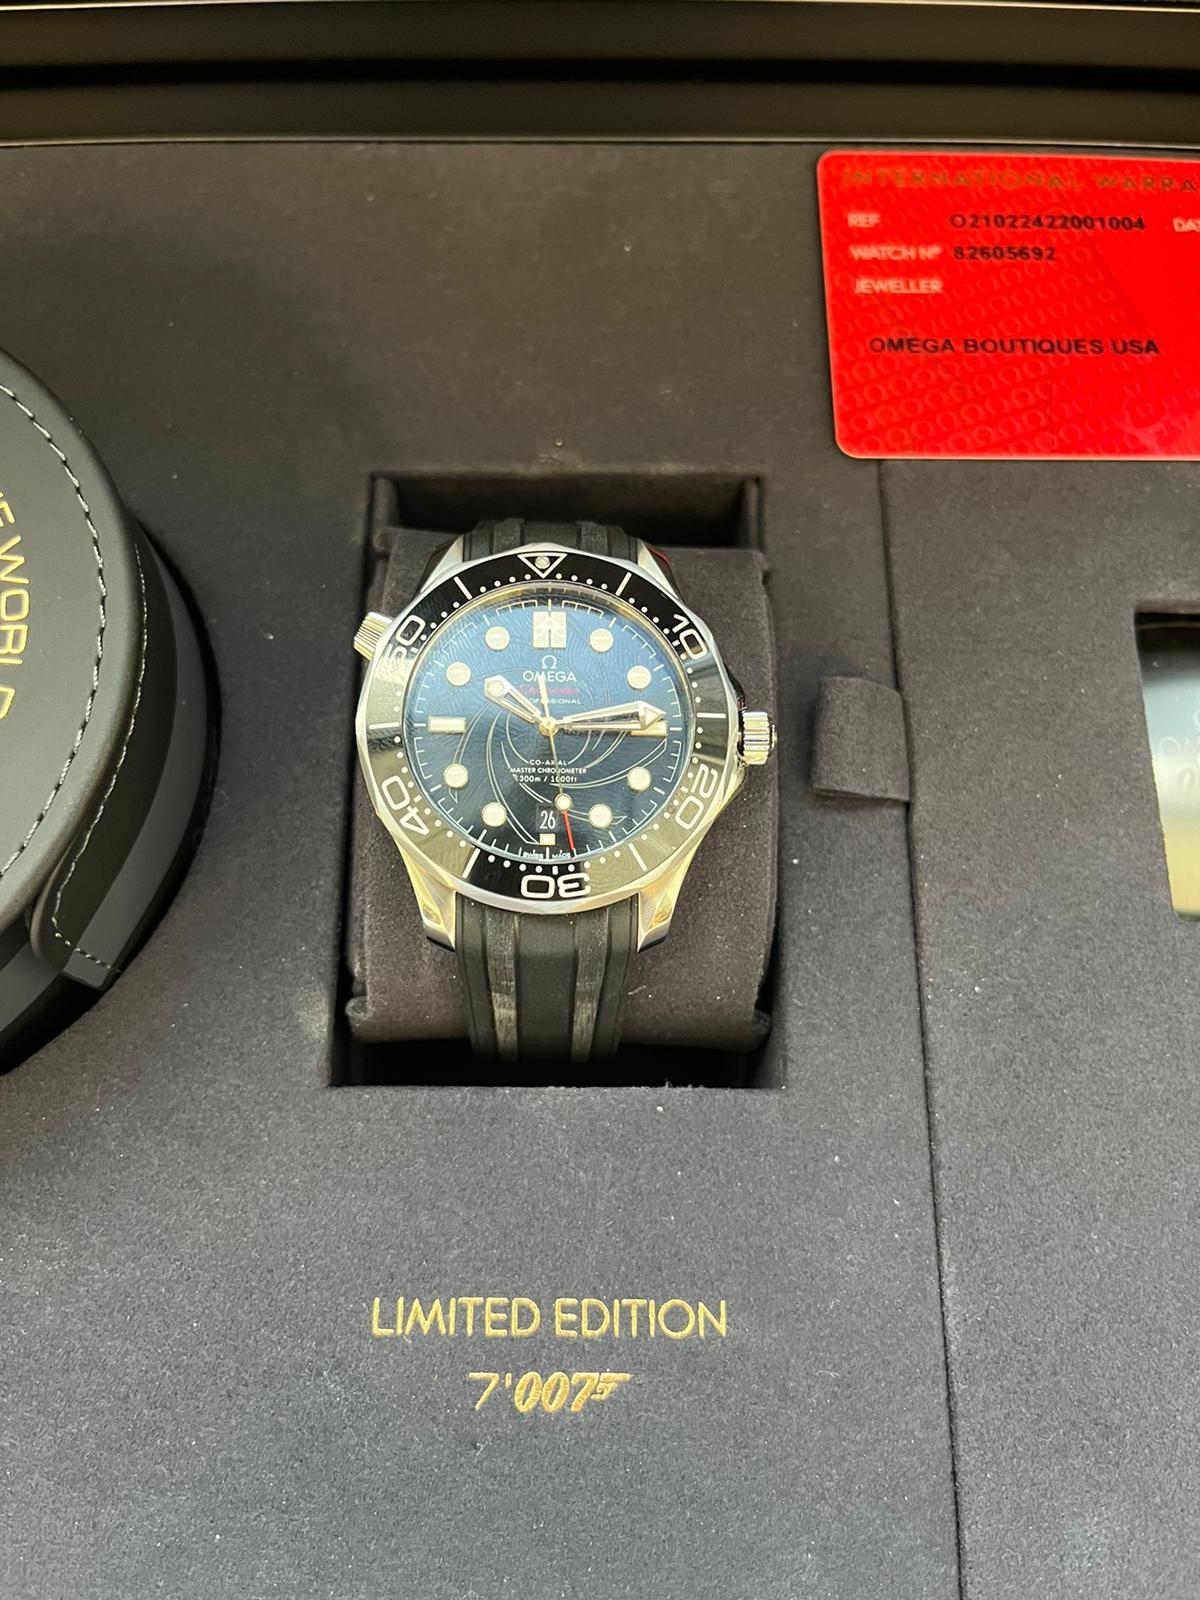 Omega Seamaster Diver 300 M James Bond Limited Edition Watch 210.22.42.20.01.004 6